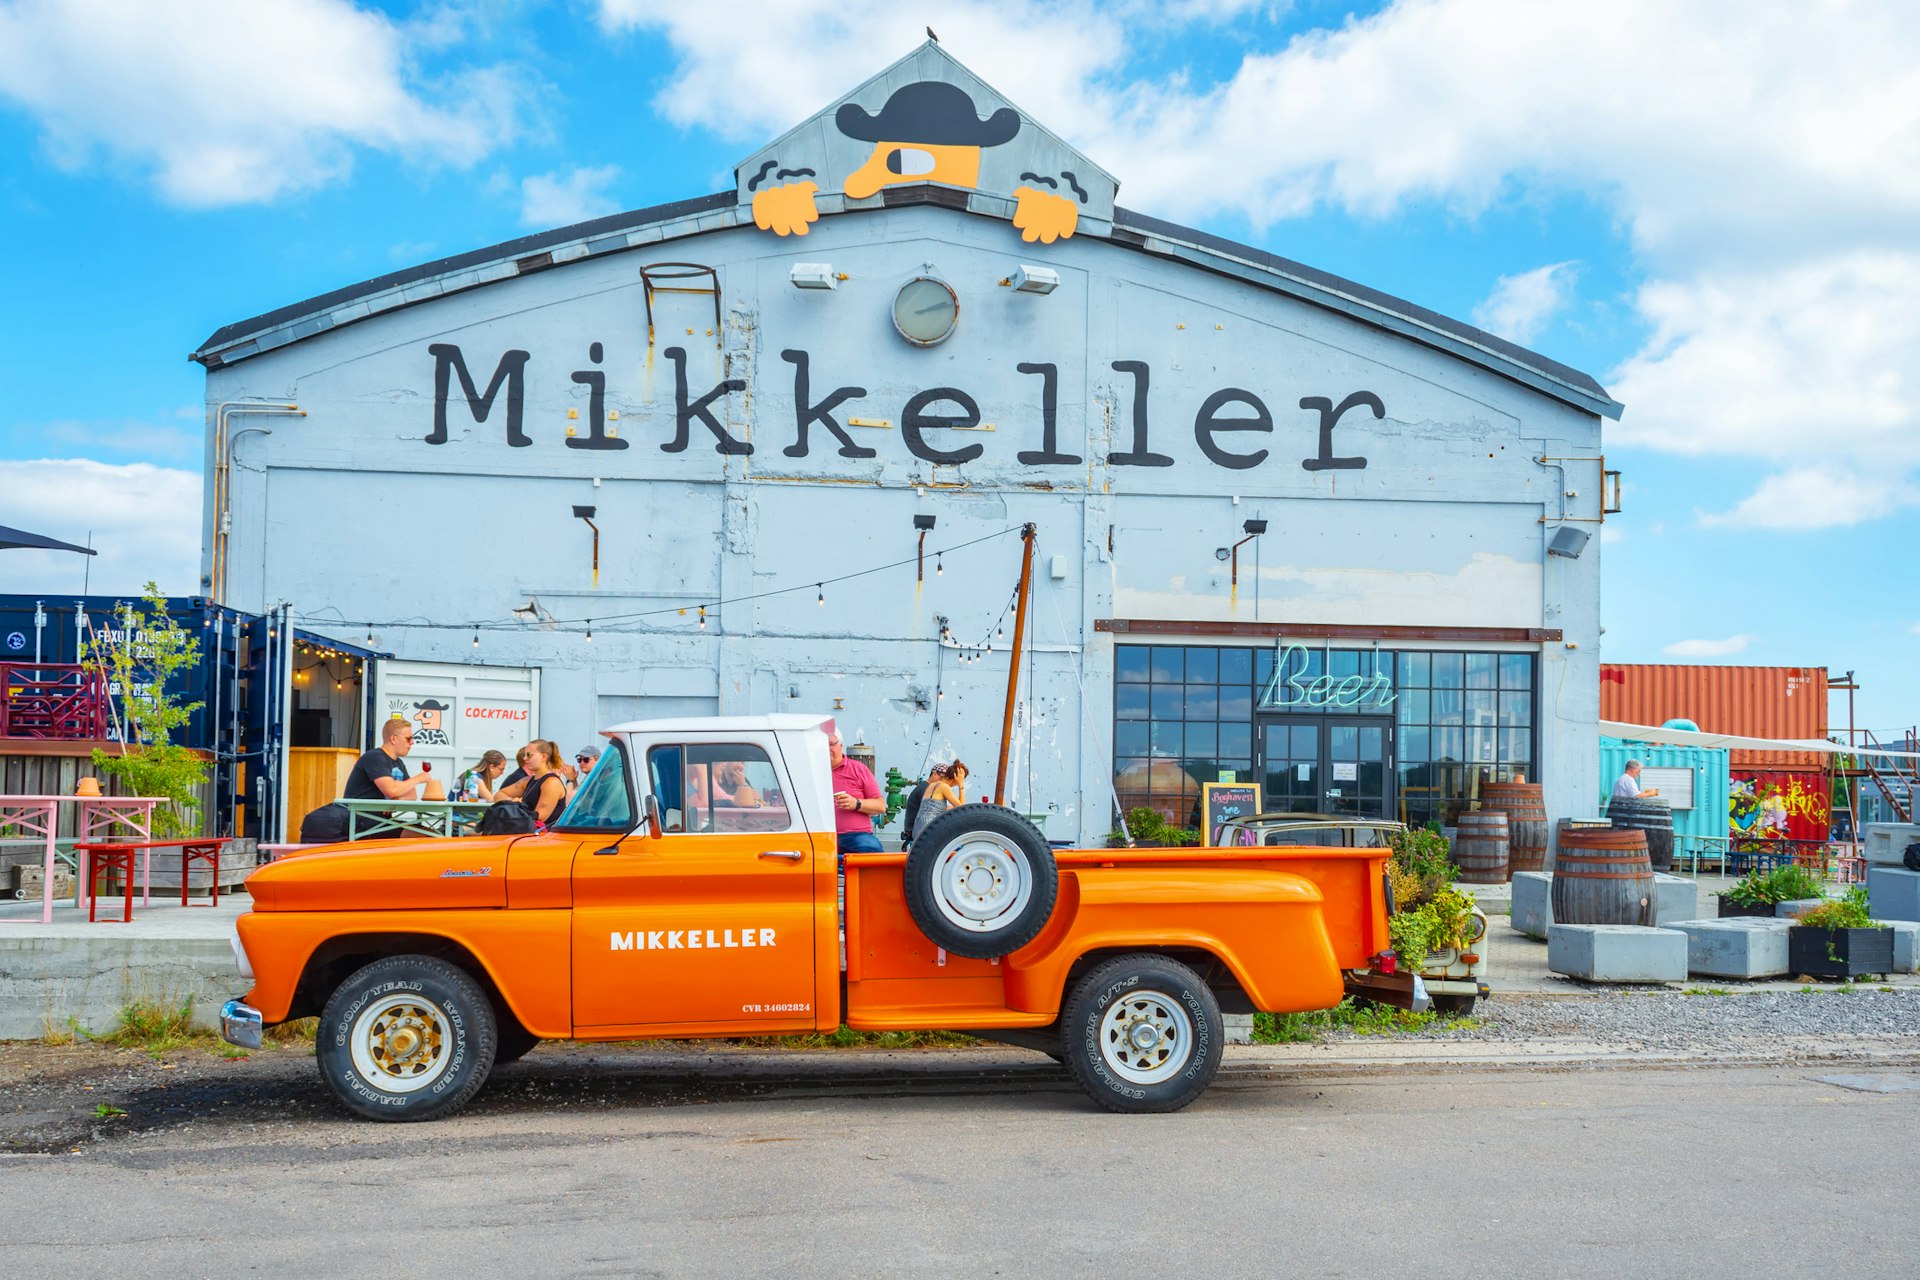 An orange retro car parked outside the Mikkeller bar at Reffen street food market.